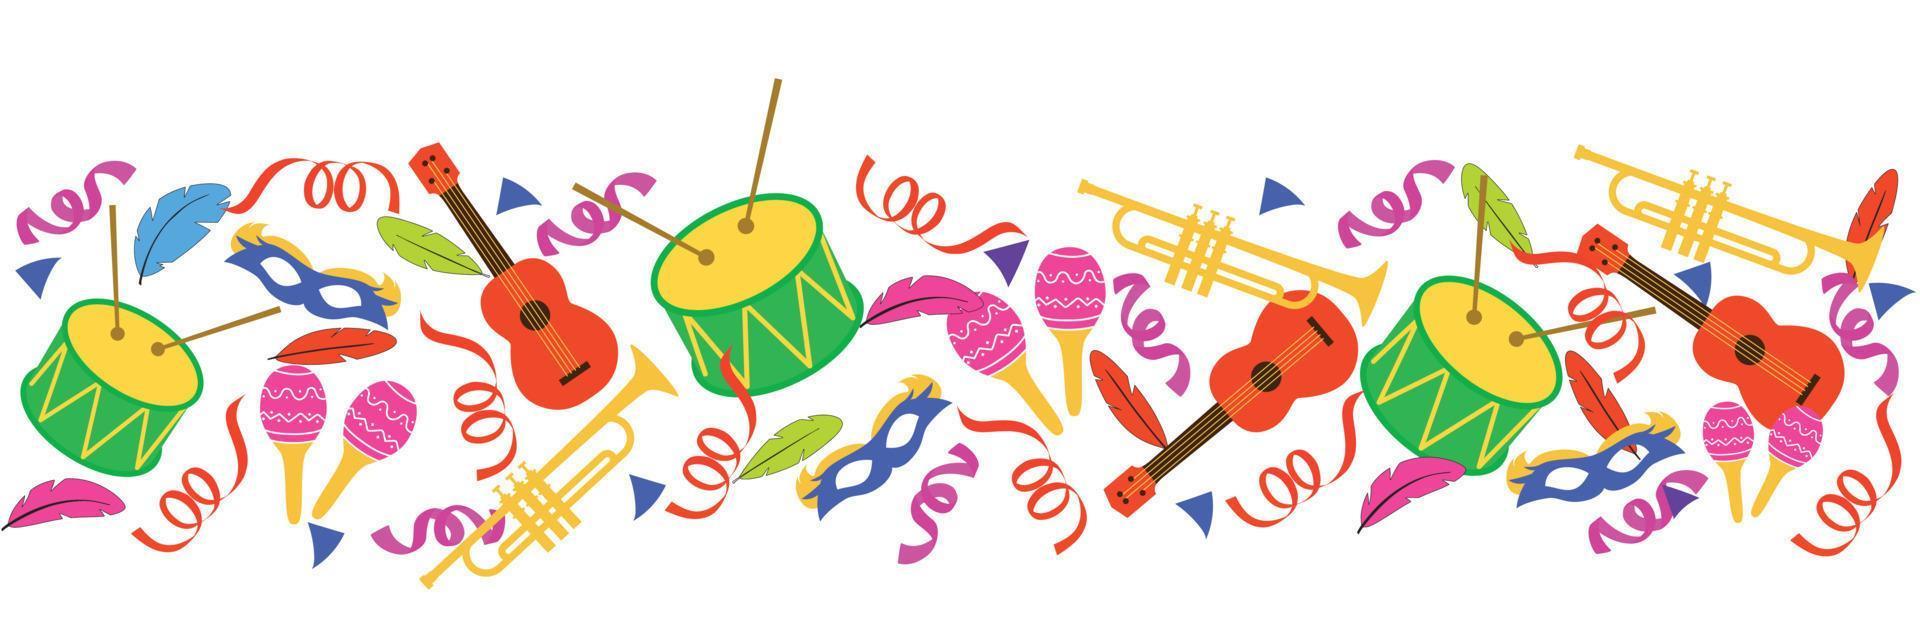 banner de carnaval con elementos de carnaval. tambor, maracas, ukelele, trompeta, máscara, serpentina vector